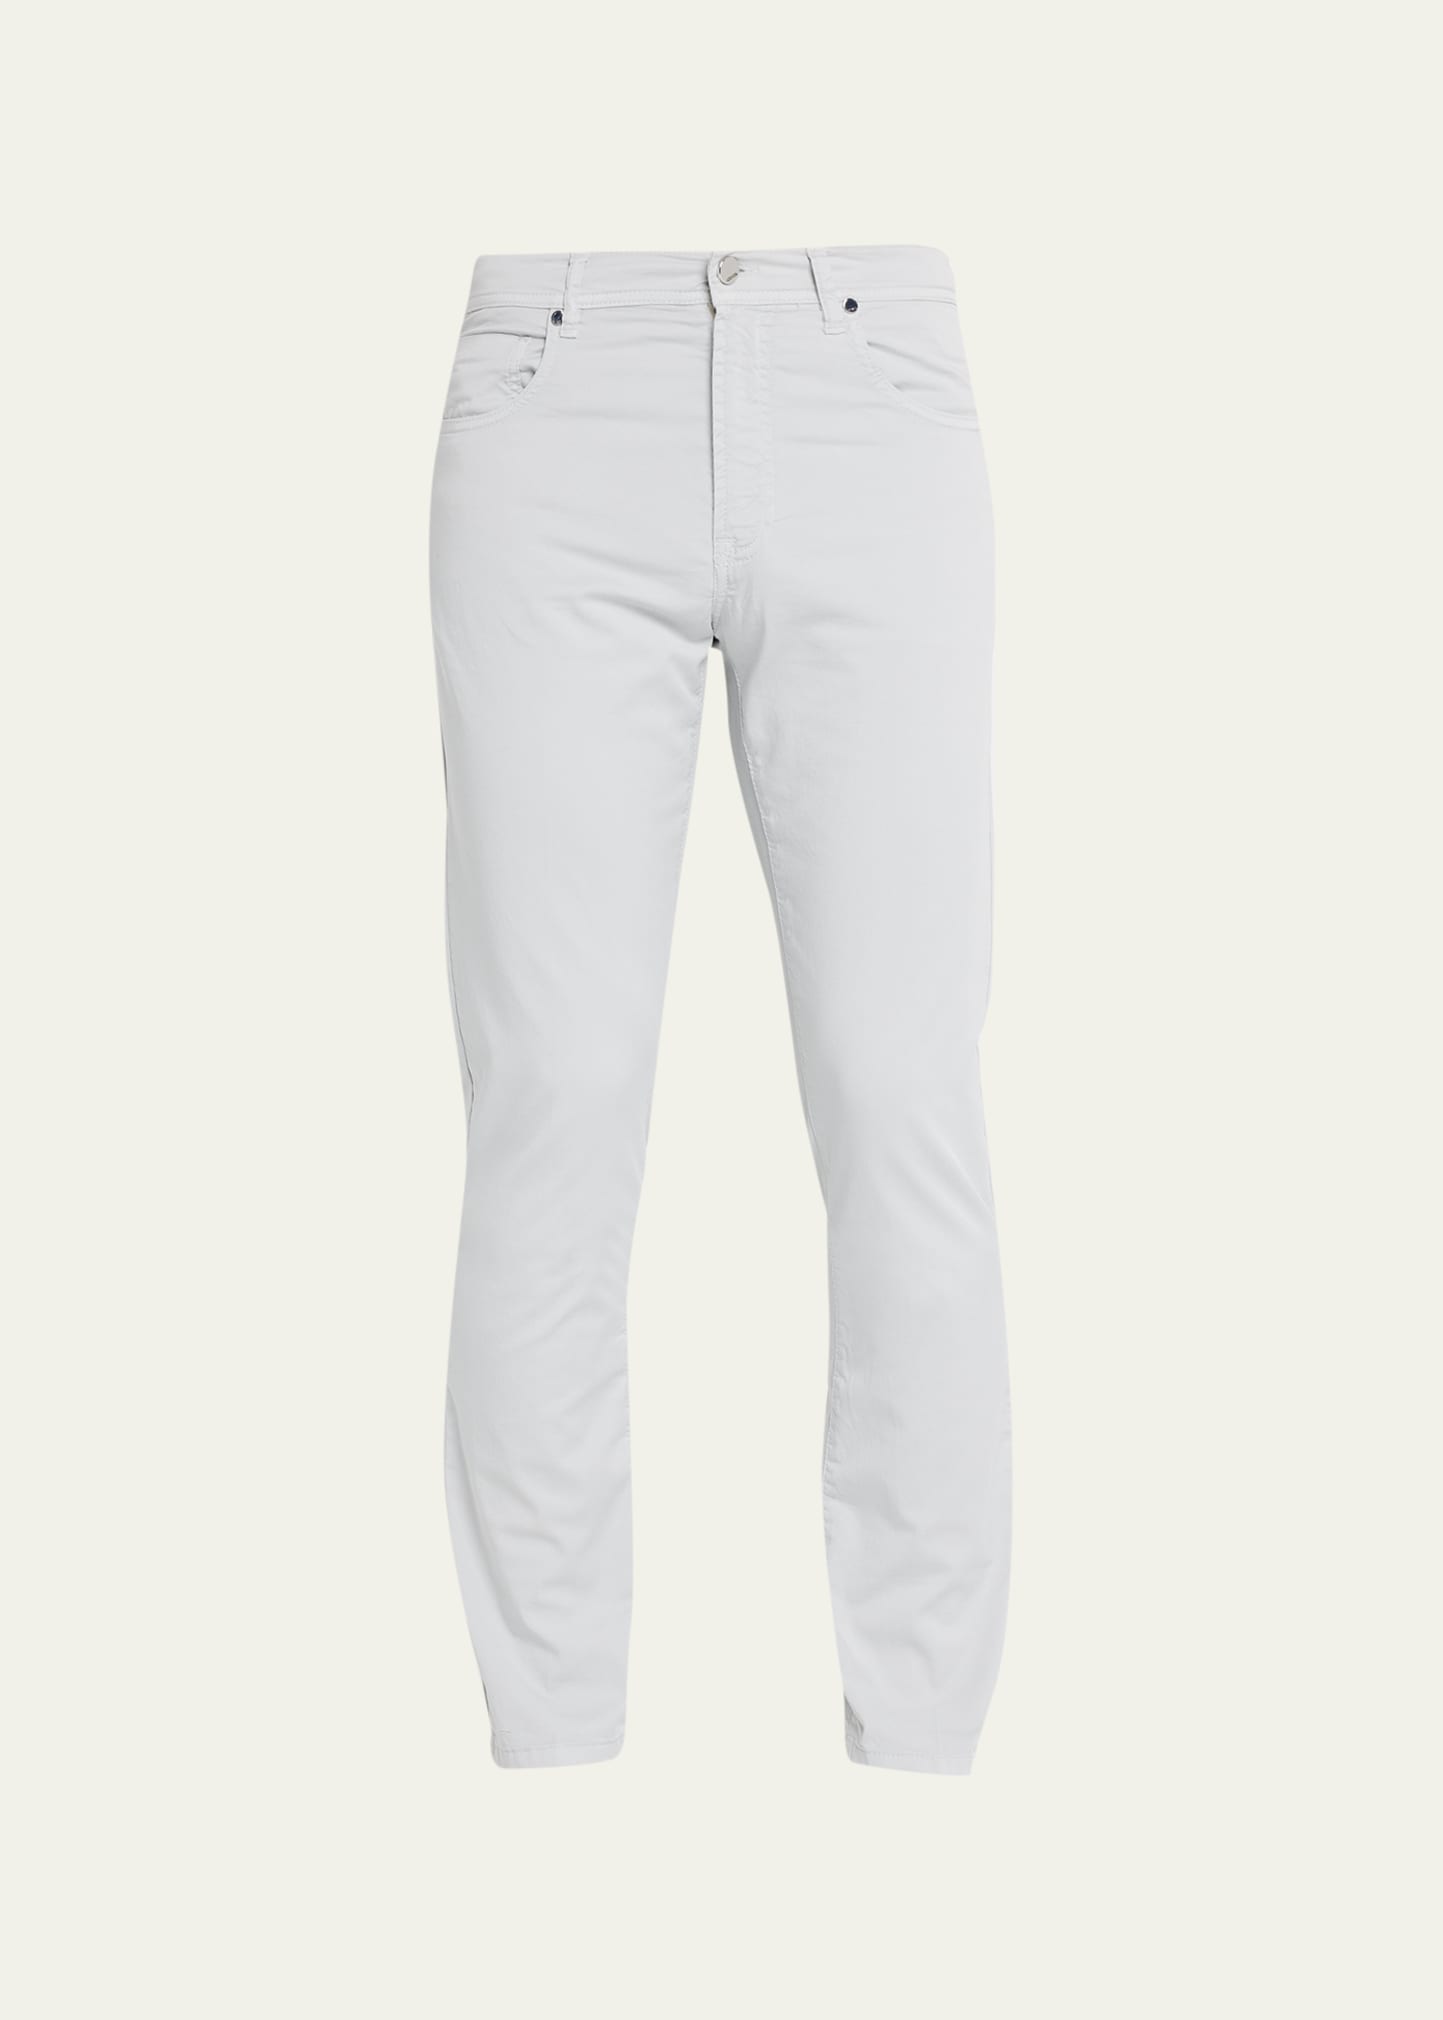 Men's Cotton-Stretch Slim 5-Pocket Pants